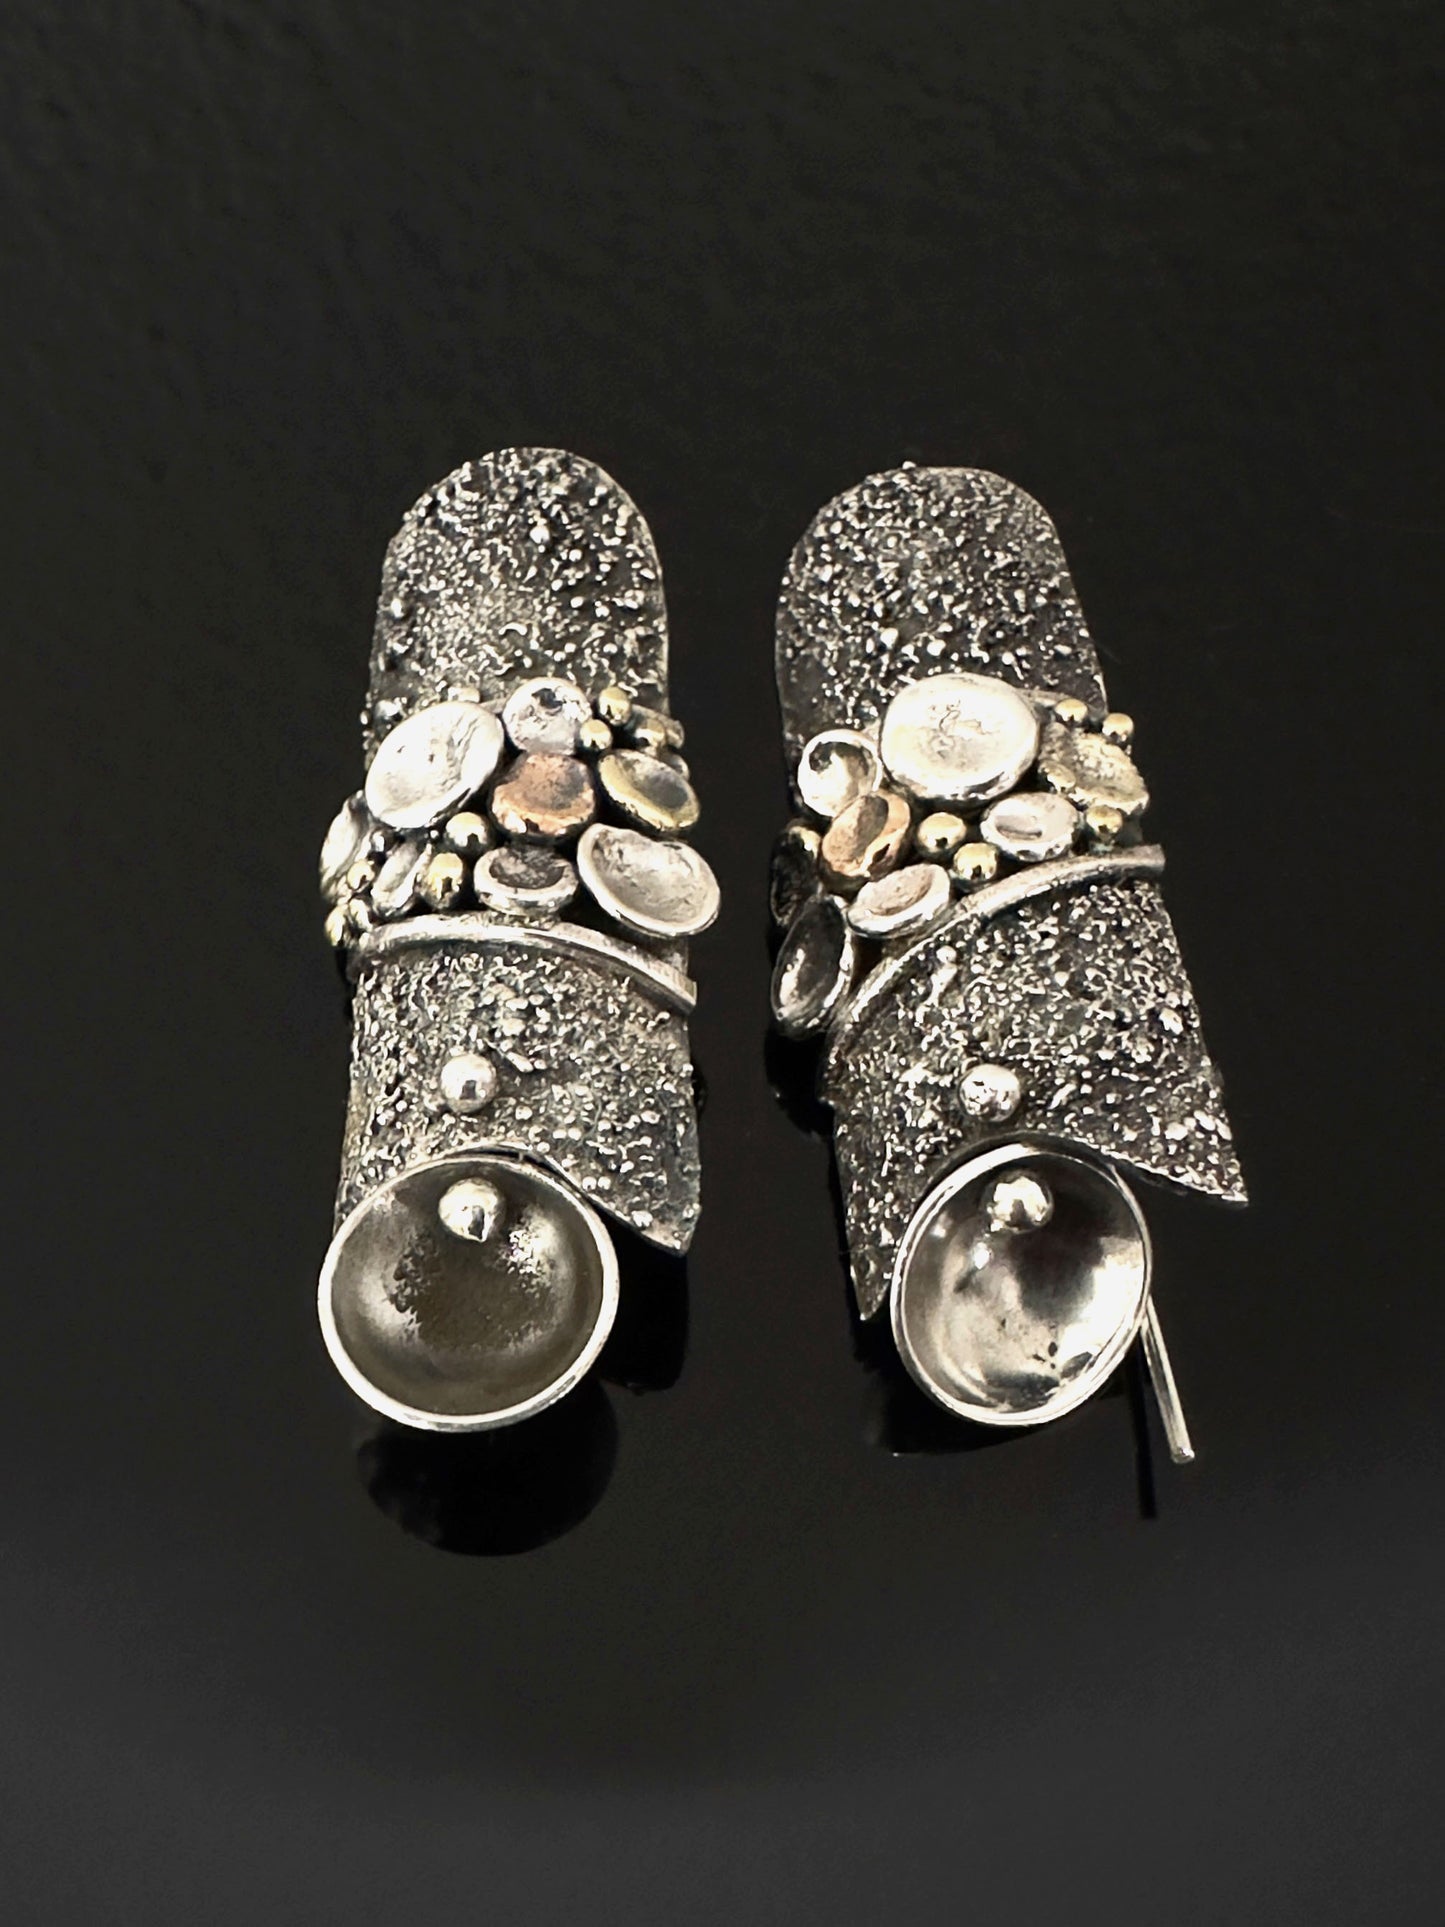 Tamara Kelly Designs - Pebbles on the beach earring